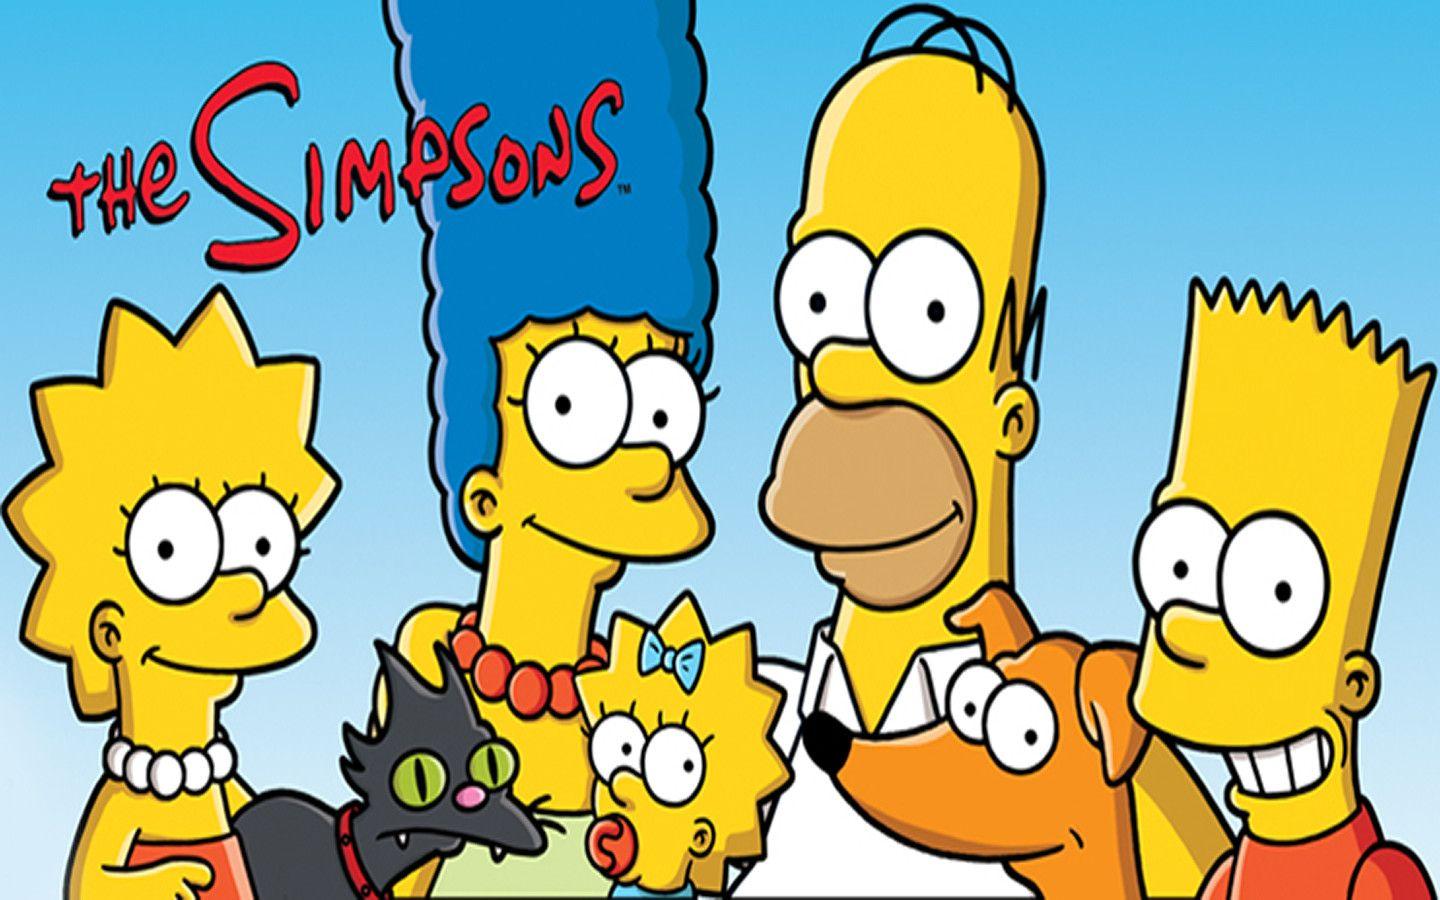 The Simpsons Family Introduction Desktop Wallpaper HD. Cartoons